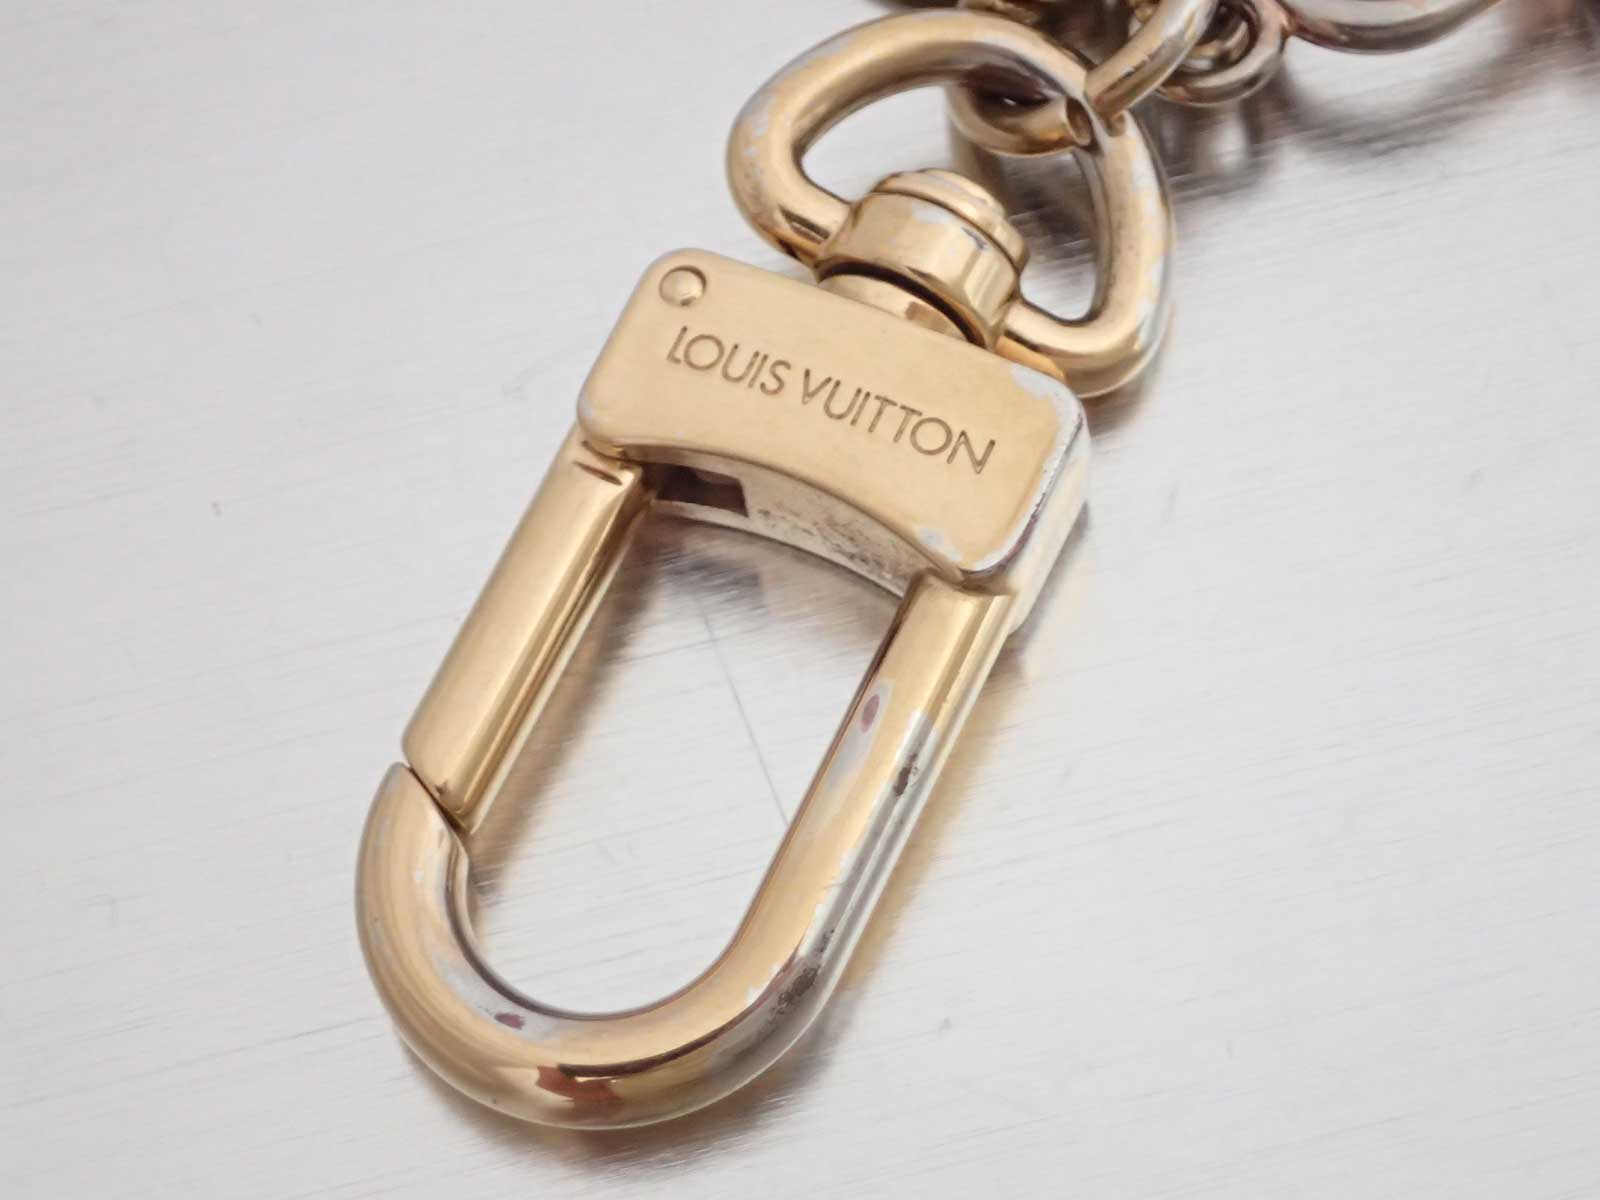 Auth Louis Vuitton Bag Charm Kaleido V Key Holder Black/Silver/Goldtone - e43840 | eBay